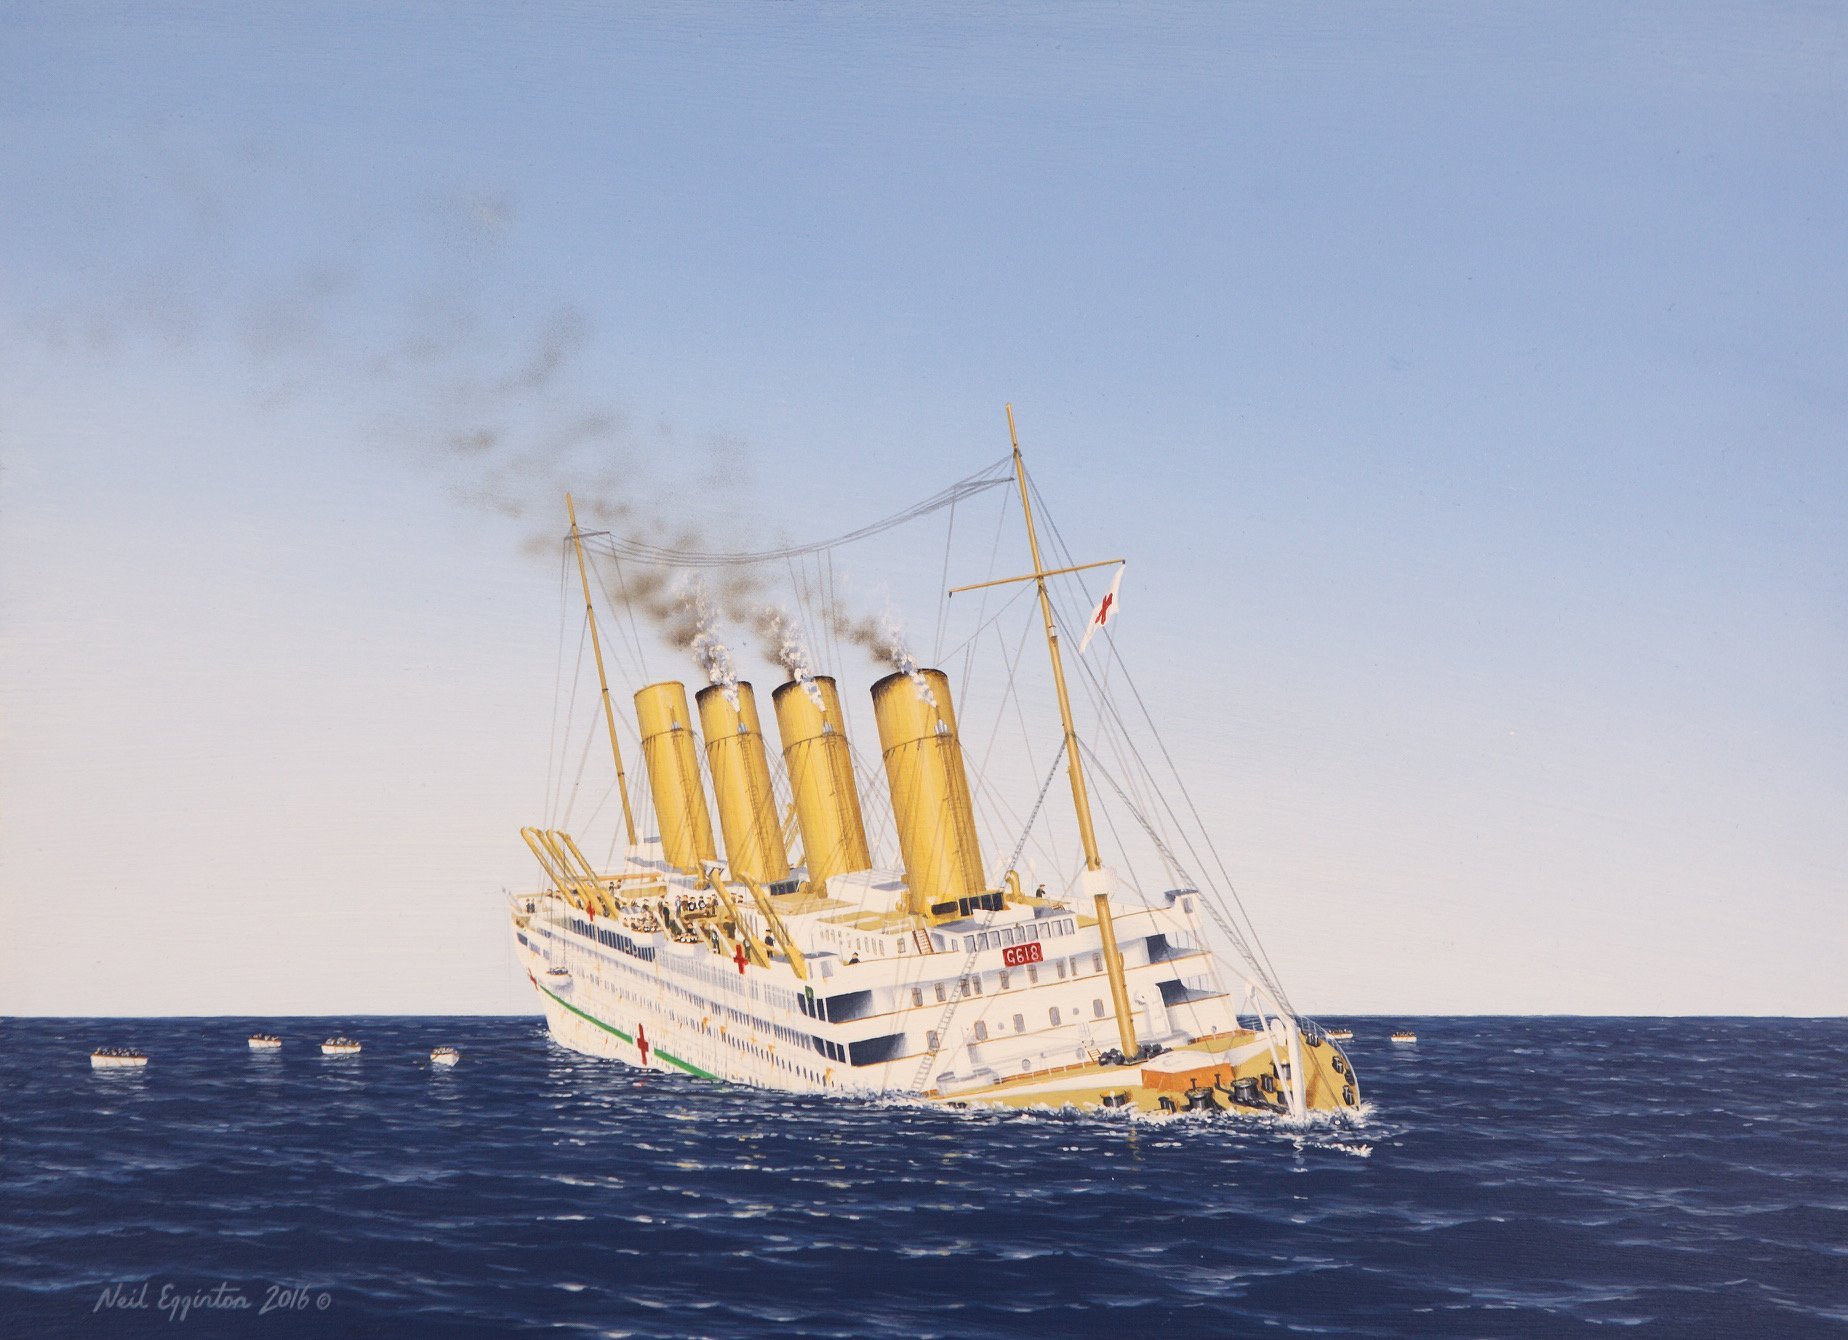 HMHS Britannic. Британик корабль. Olympic, Британик, Титаник корабль. Британика корабль крушение. Картинки британика